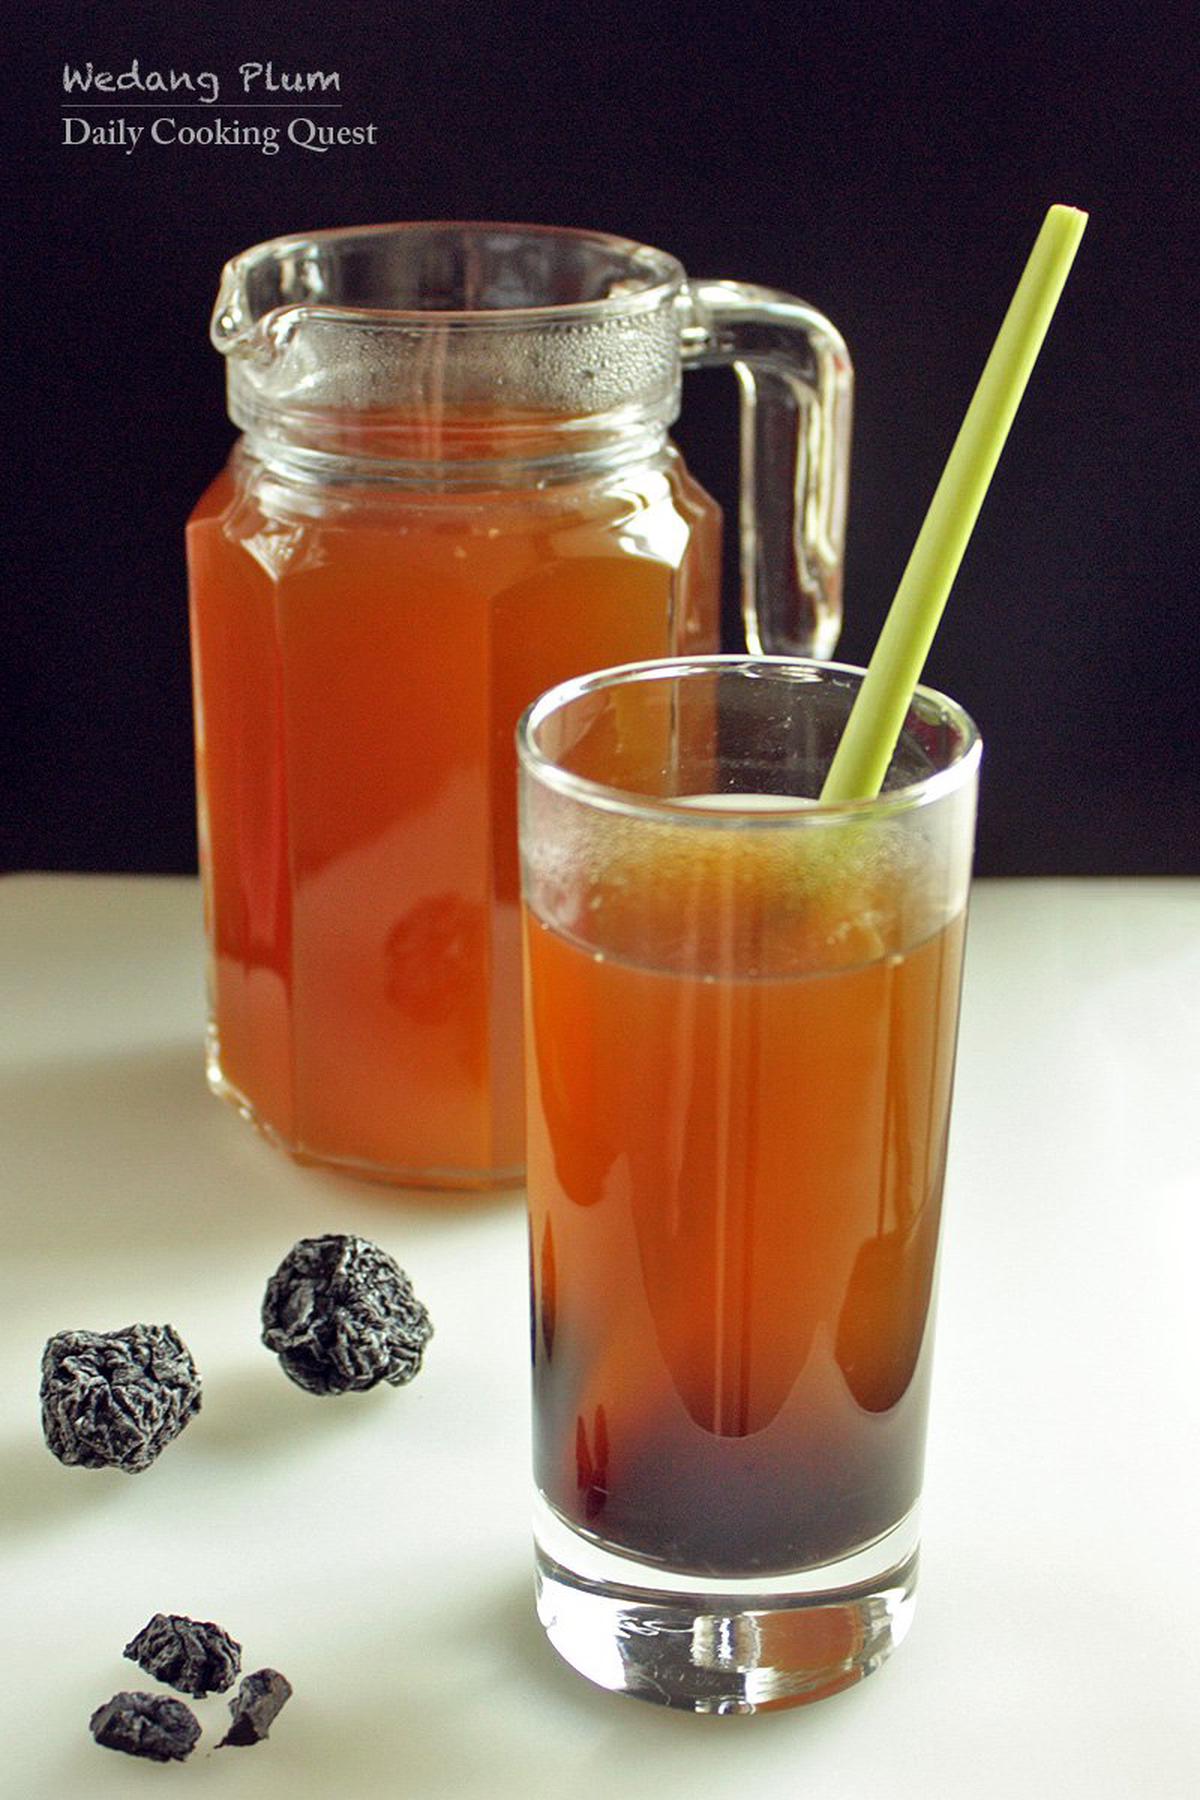 Wedang Plum - Plum and Lemongrass Tea